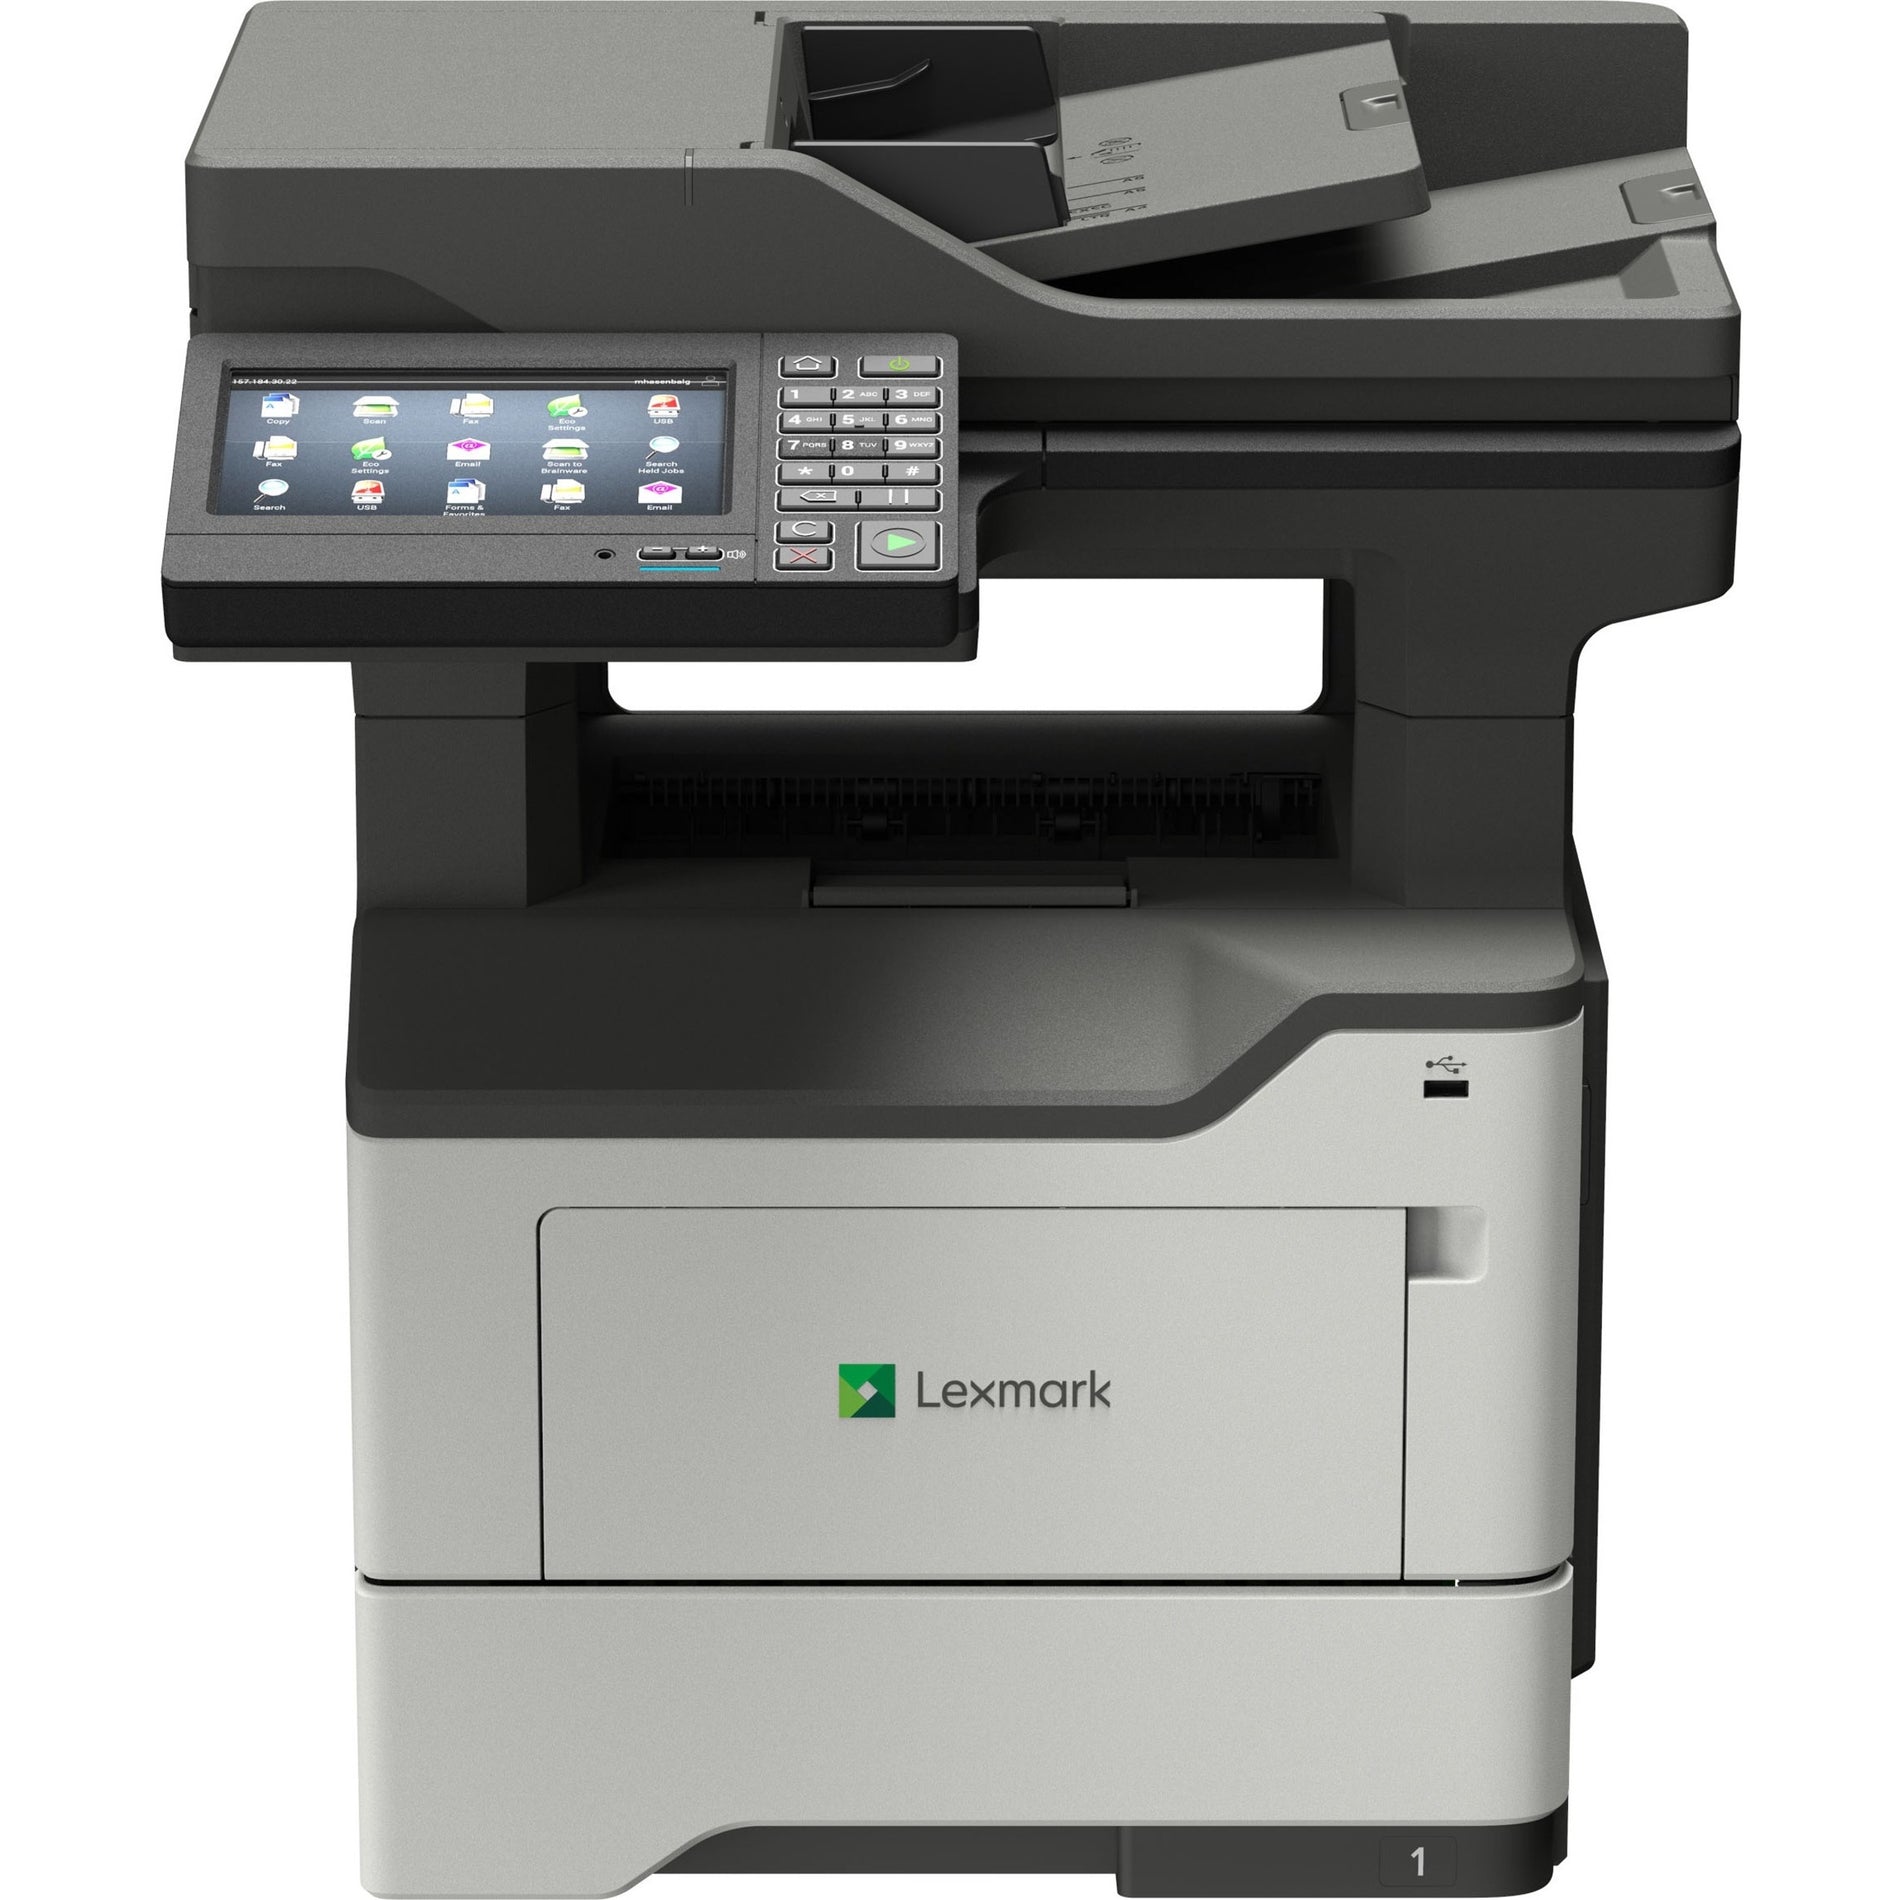 Lexmark 36ST905 MX622ade Laser Multifunction Printer, Monochrome, 50 ppm, 1200 x 1200 dpi